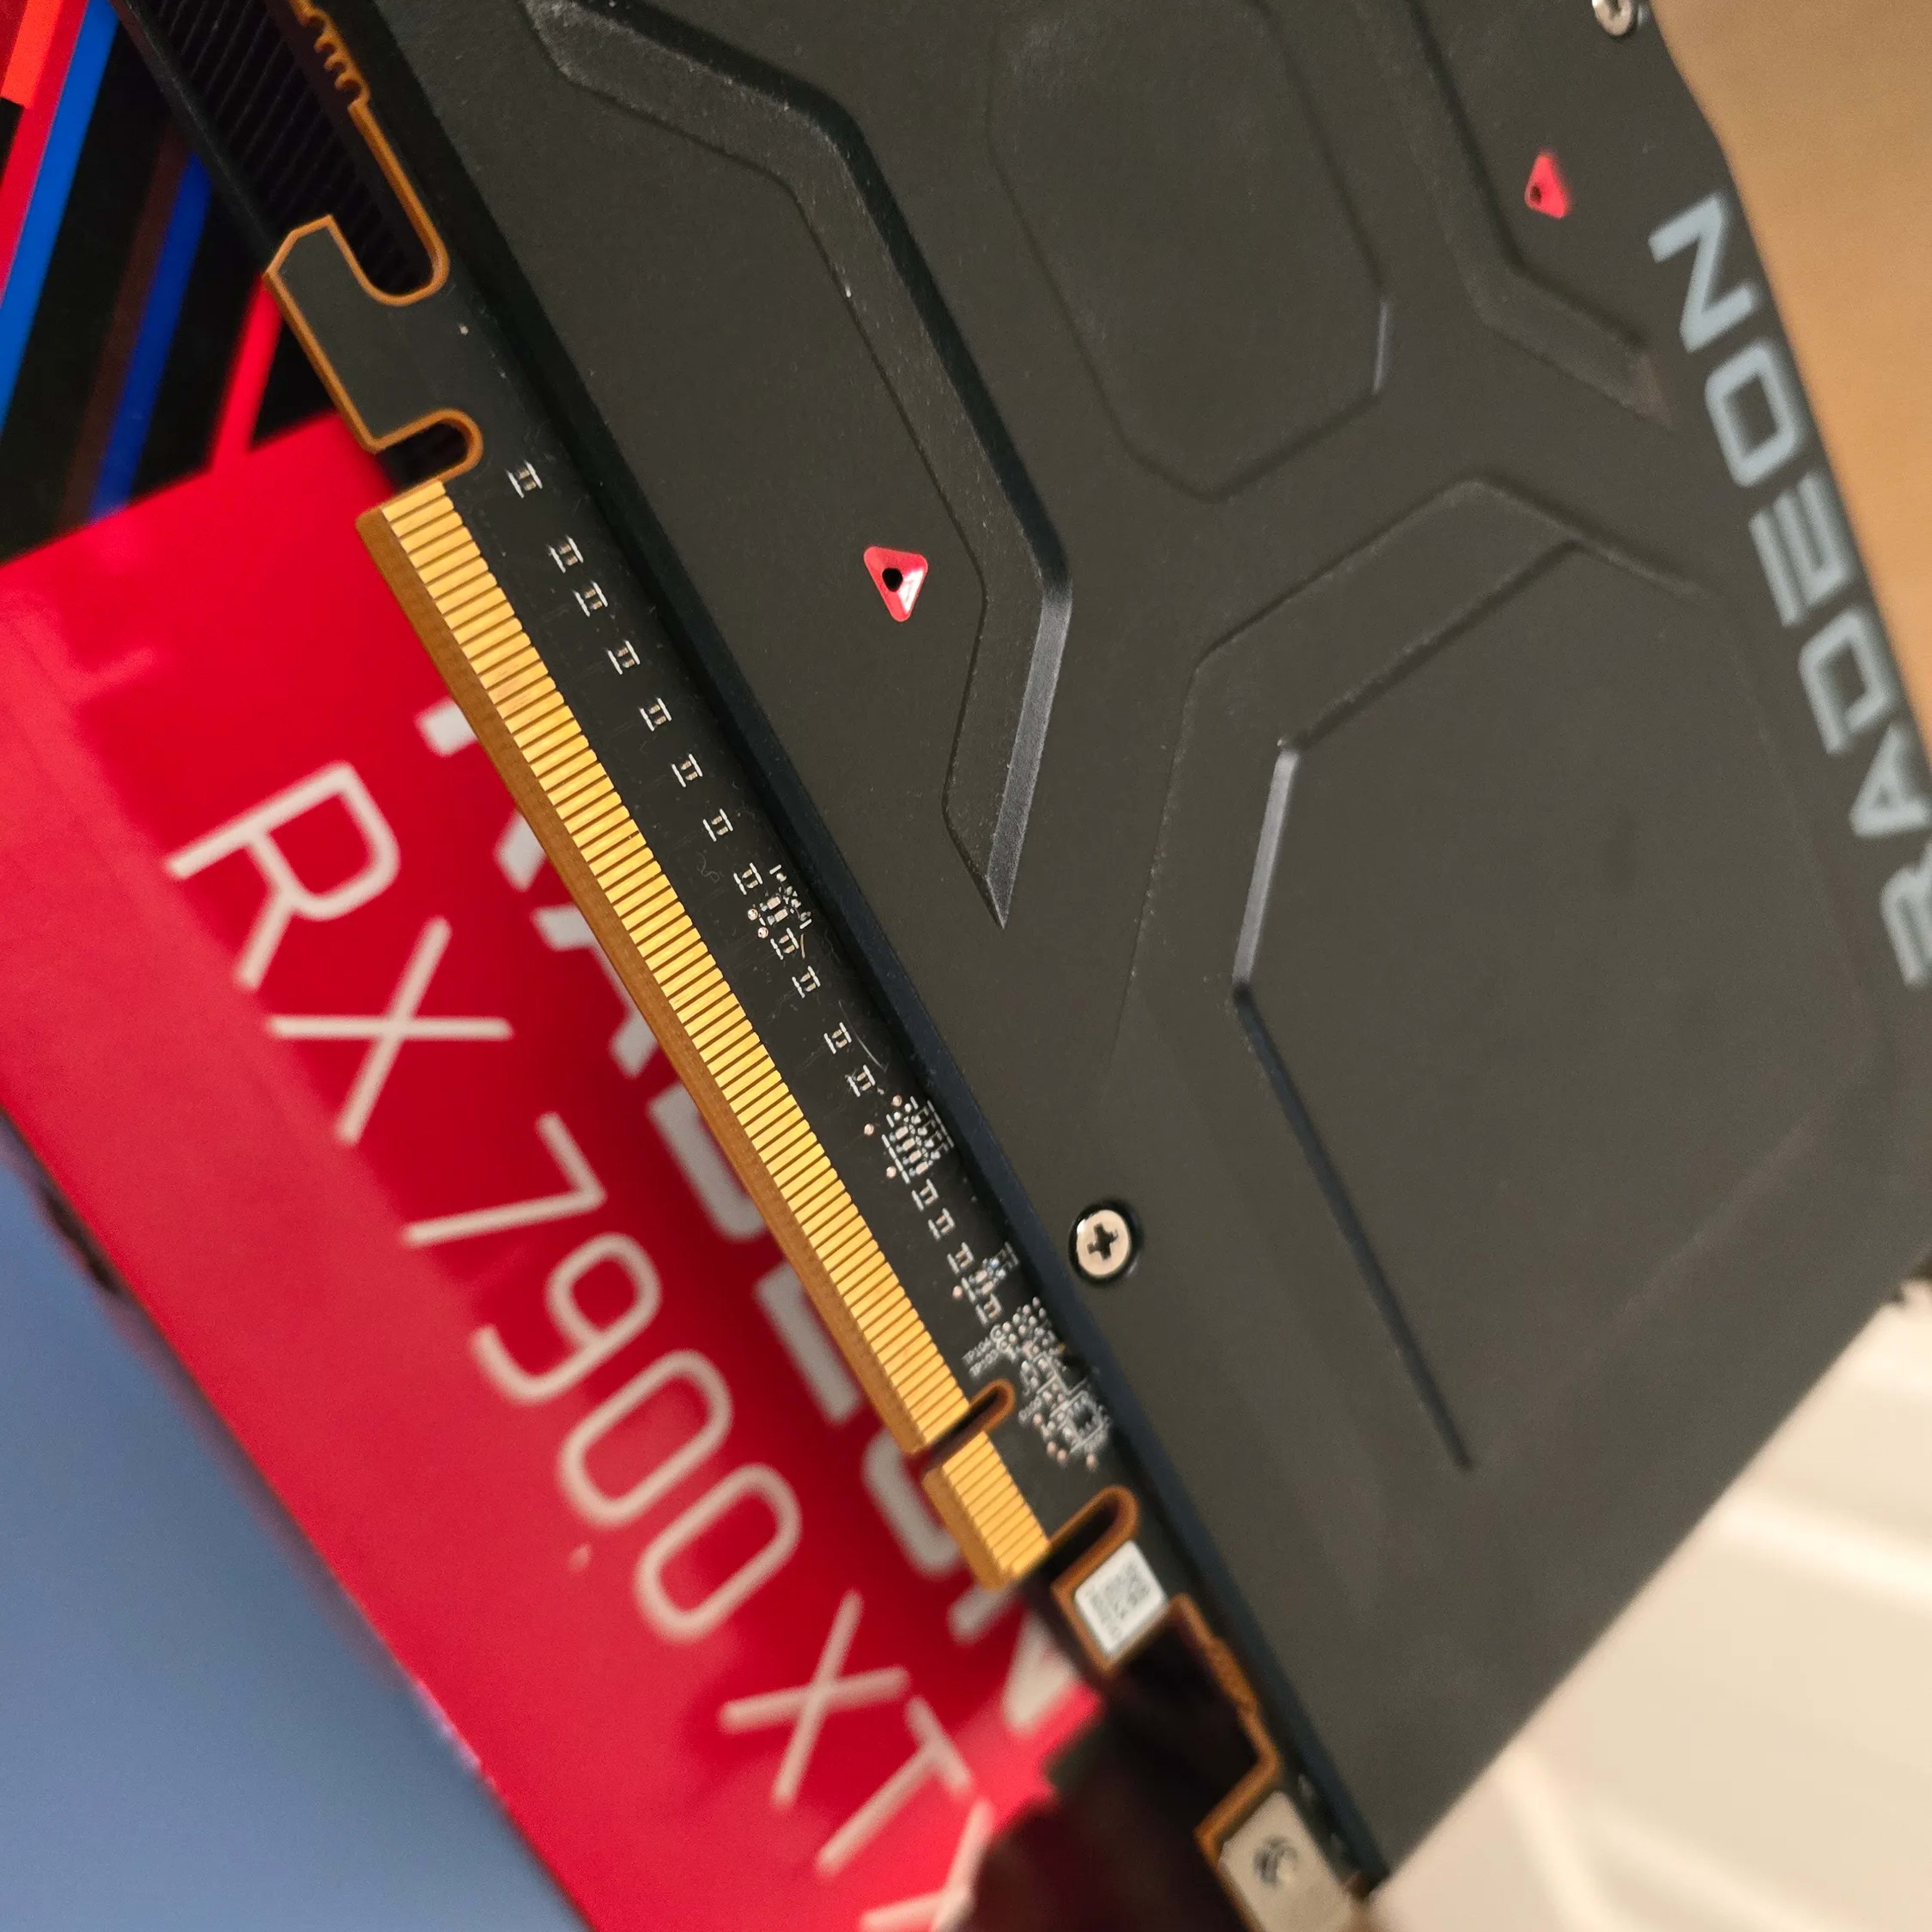 Sapphire AMD Radeon RX 7900 XTX 24GB